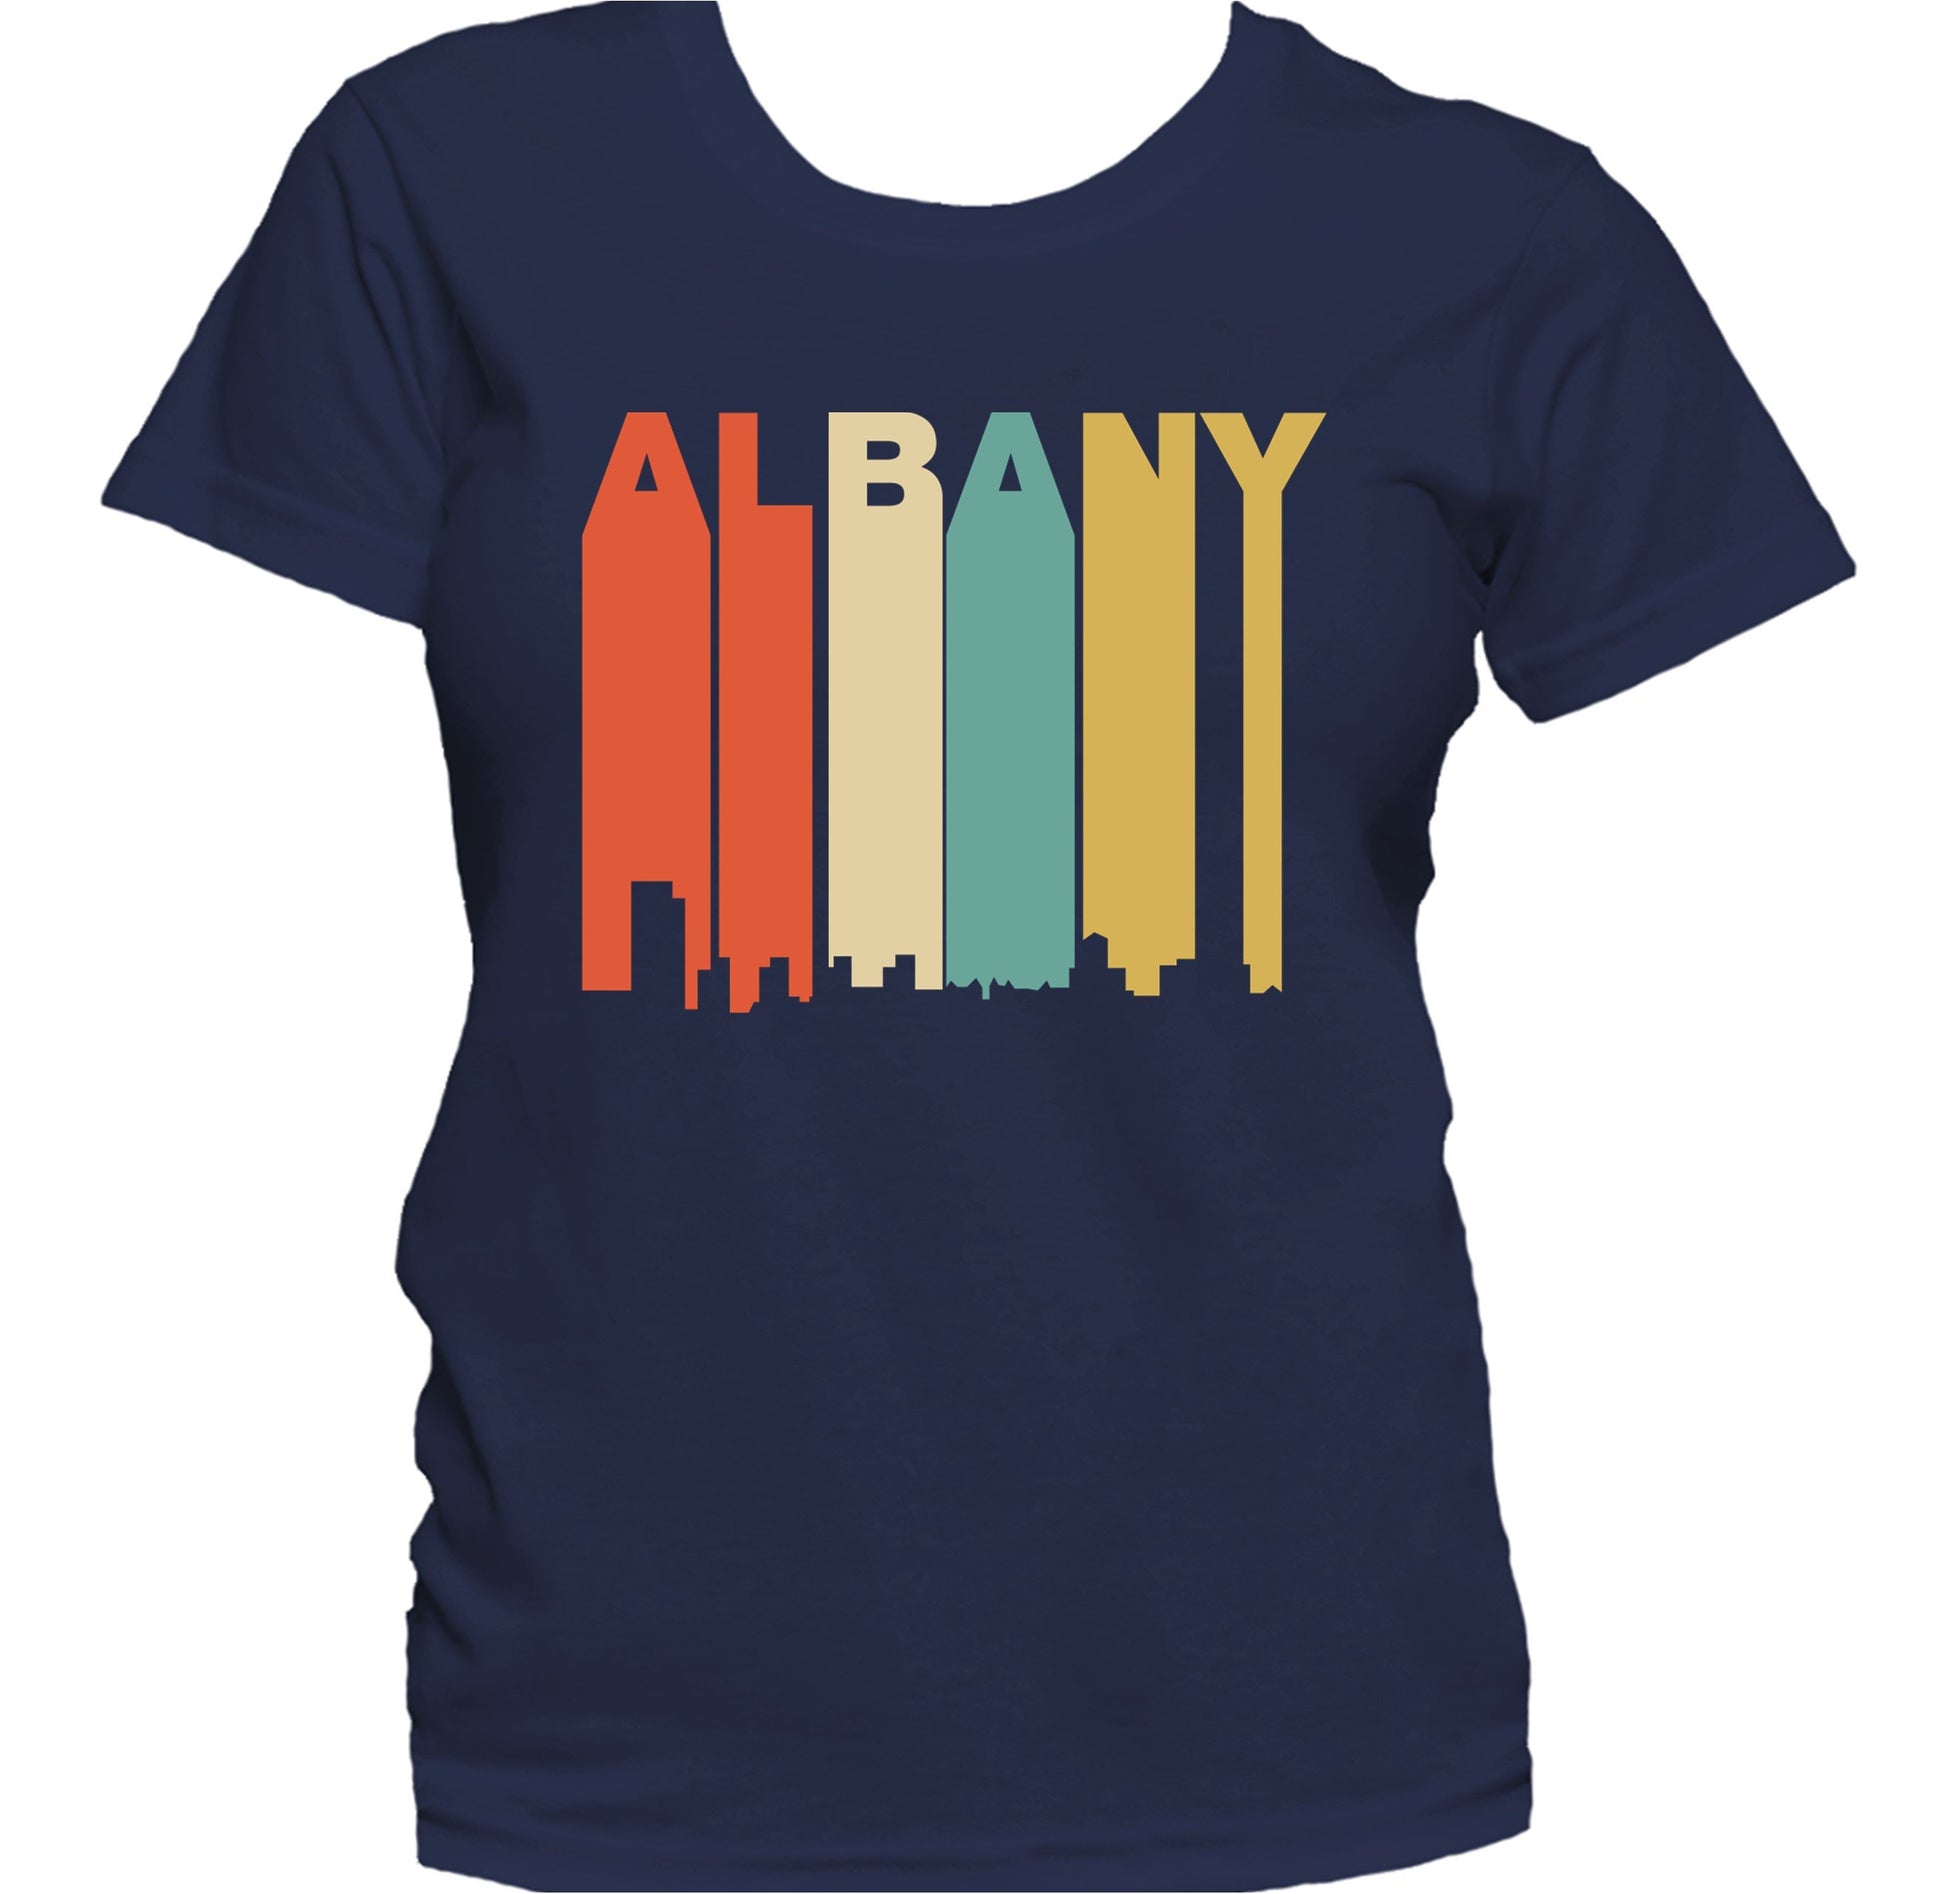 Retro 1970's Style Albany New York Skyline Women's T-Shirt